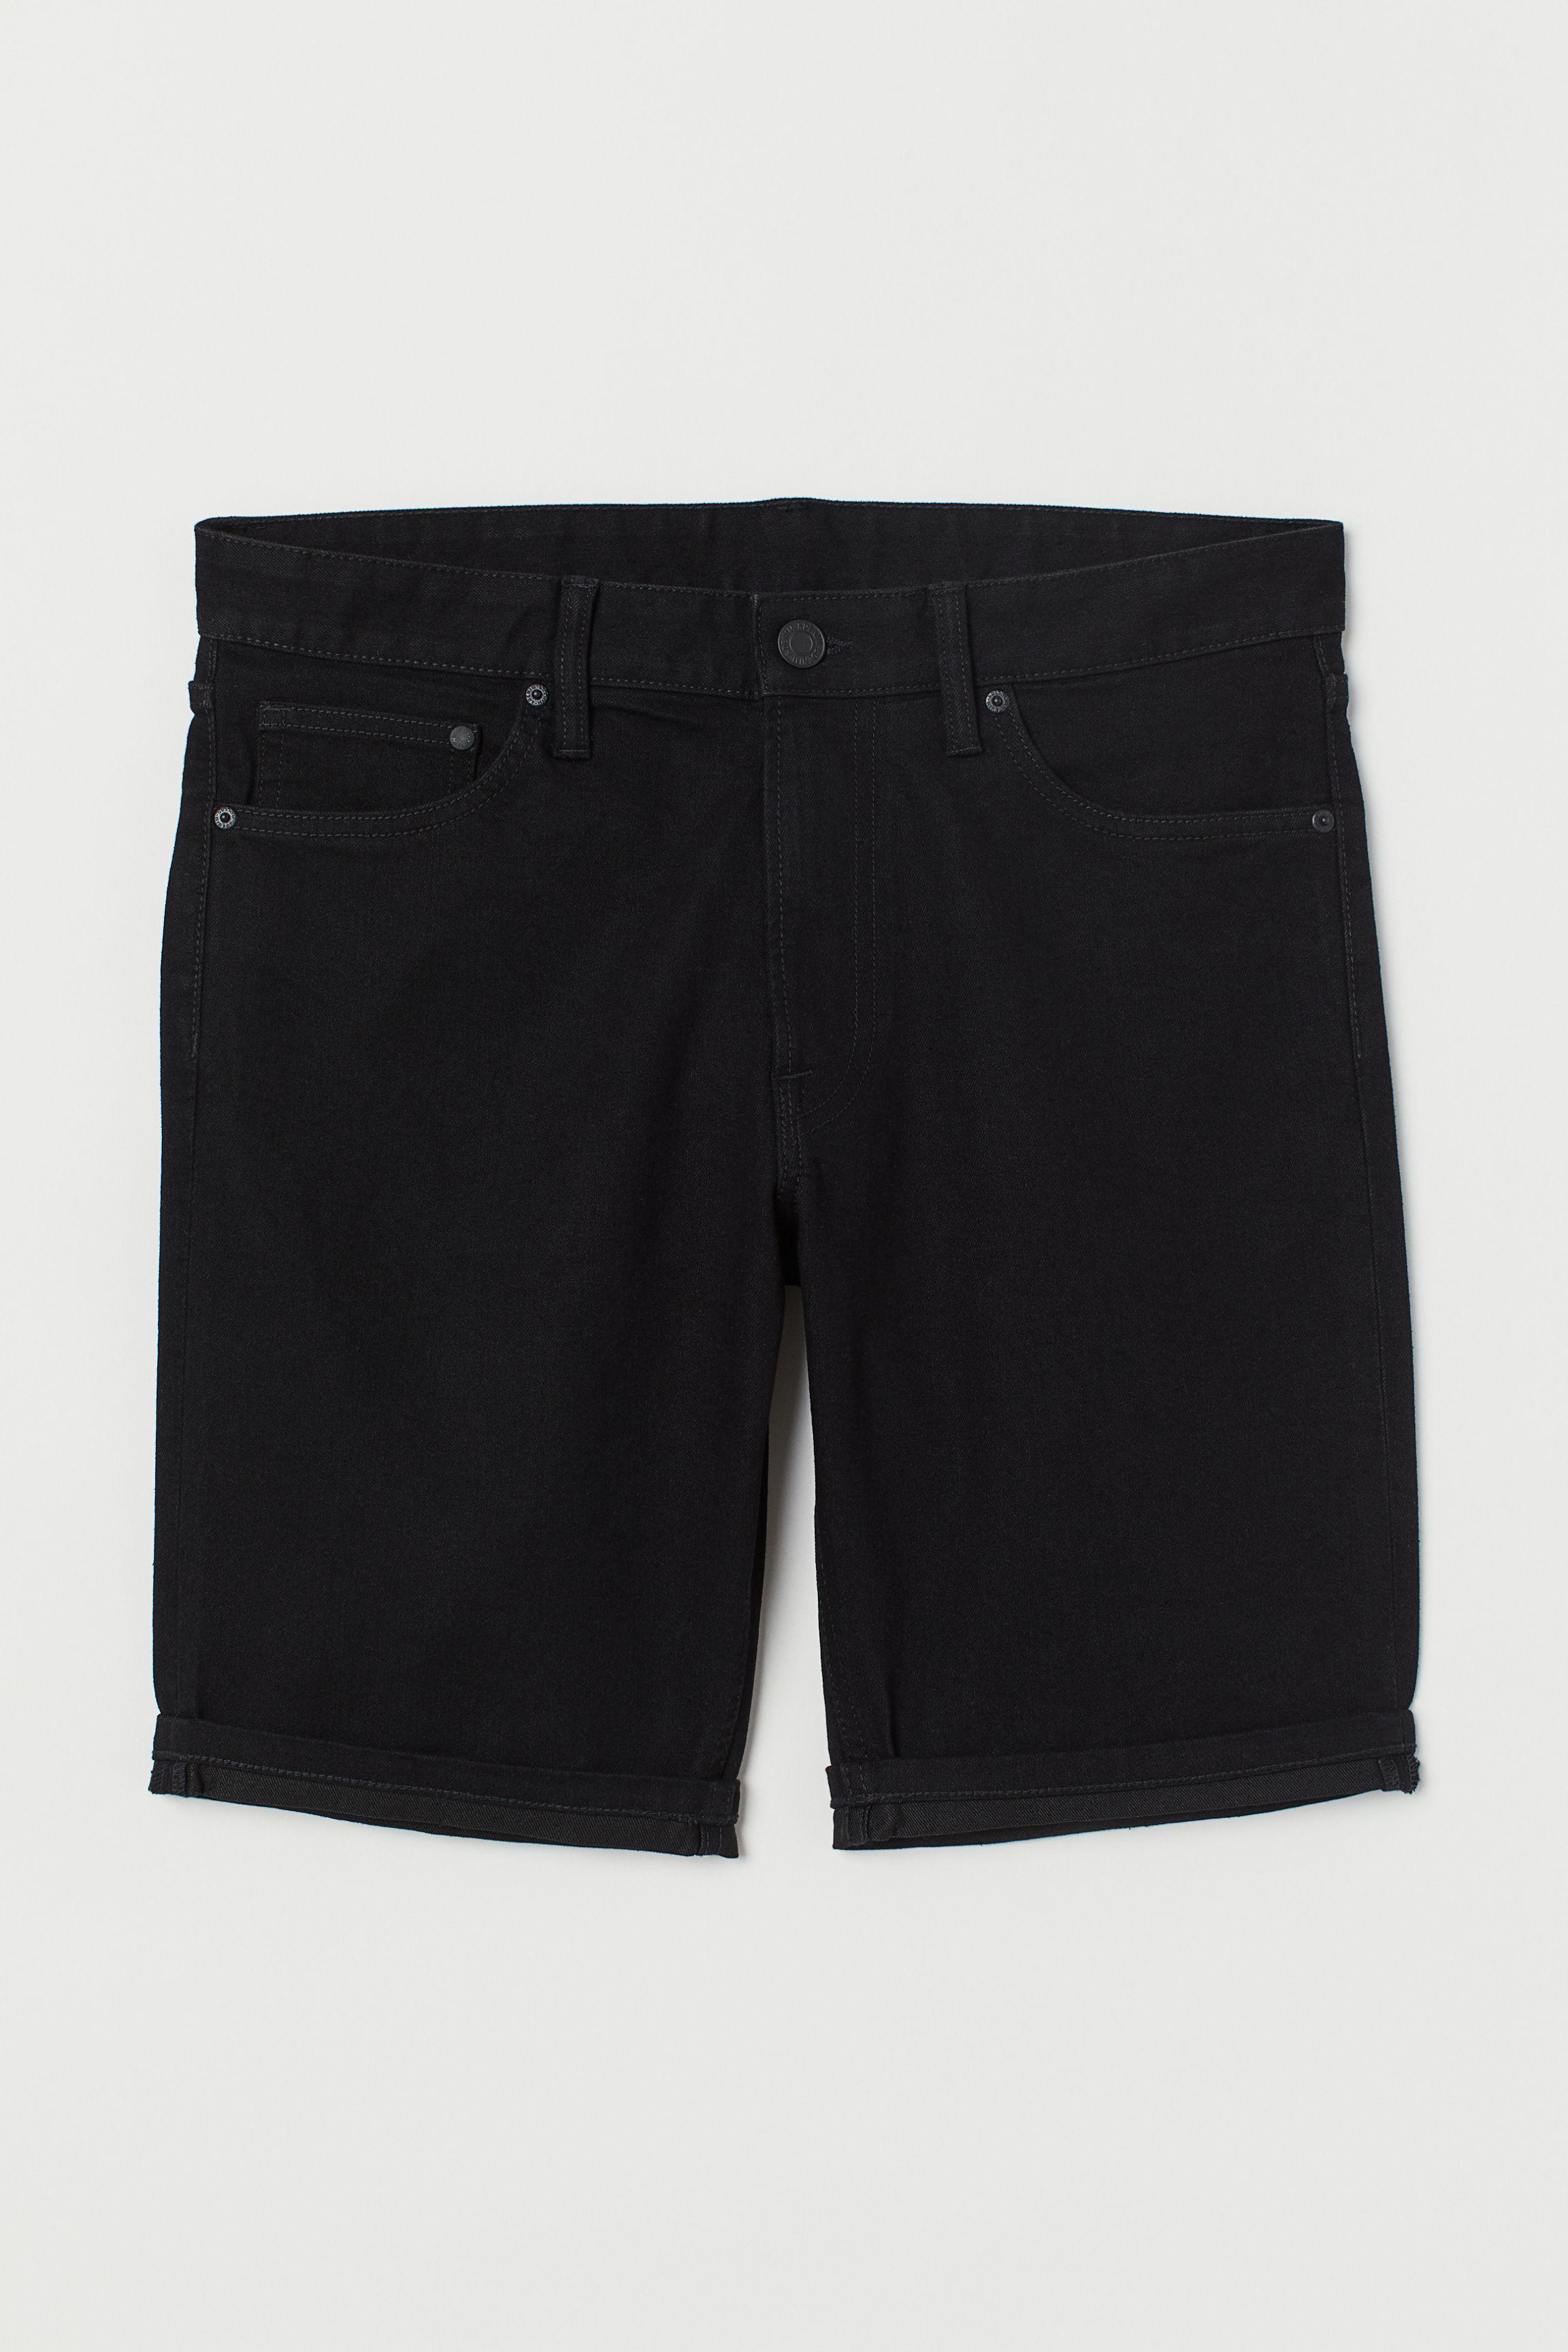 H&M Denim Shorts in Black for Men - Lyst